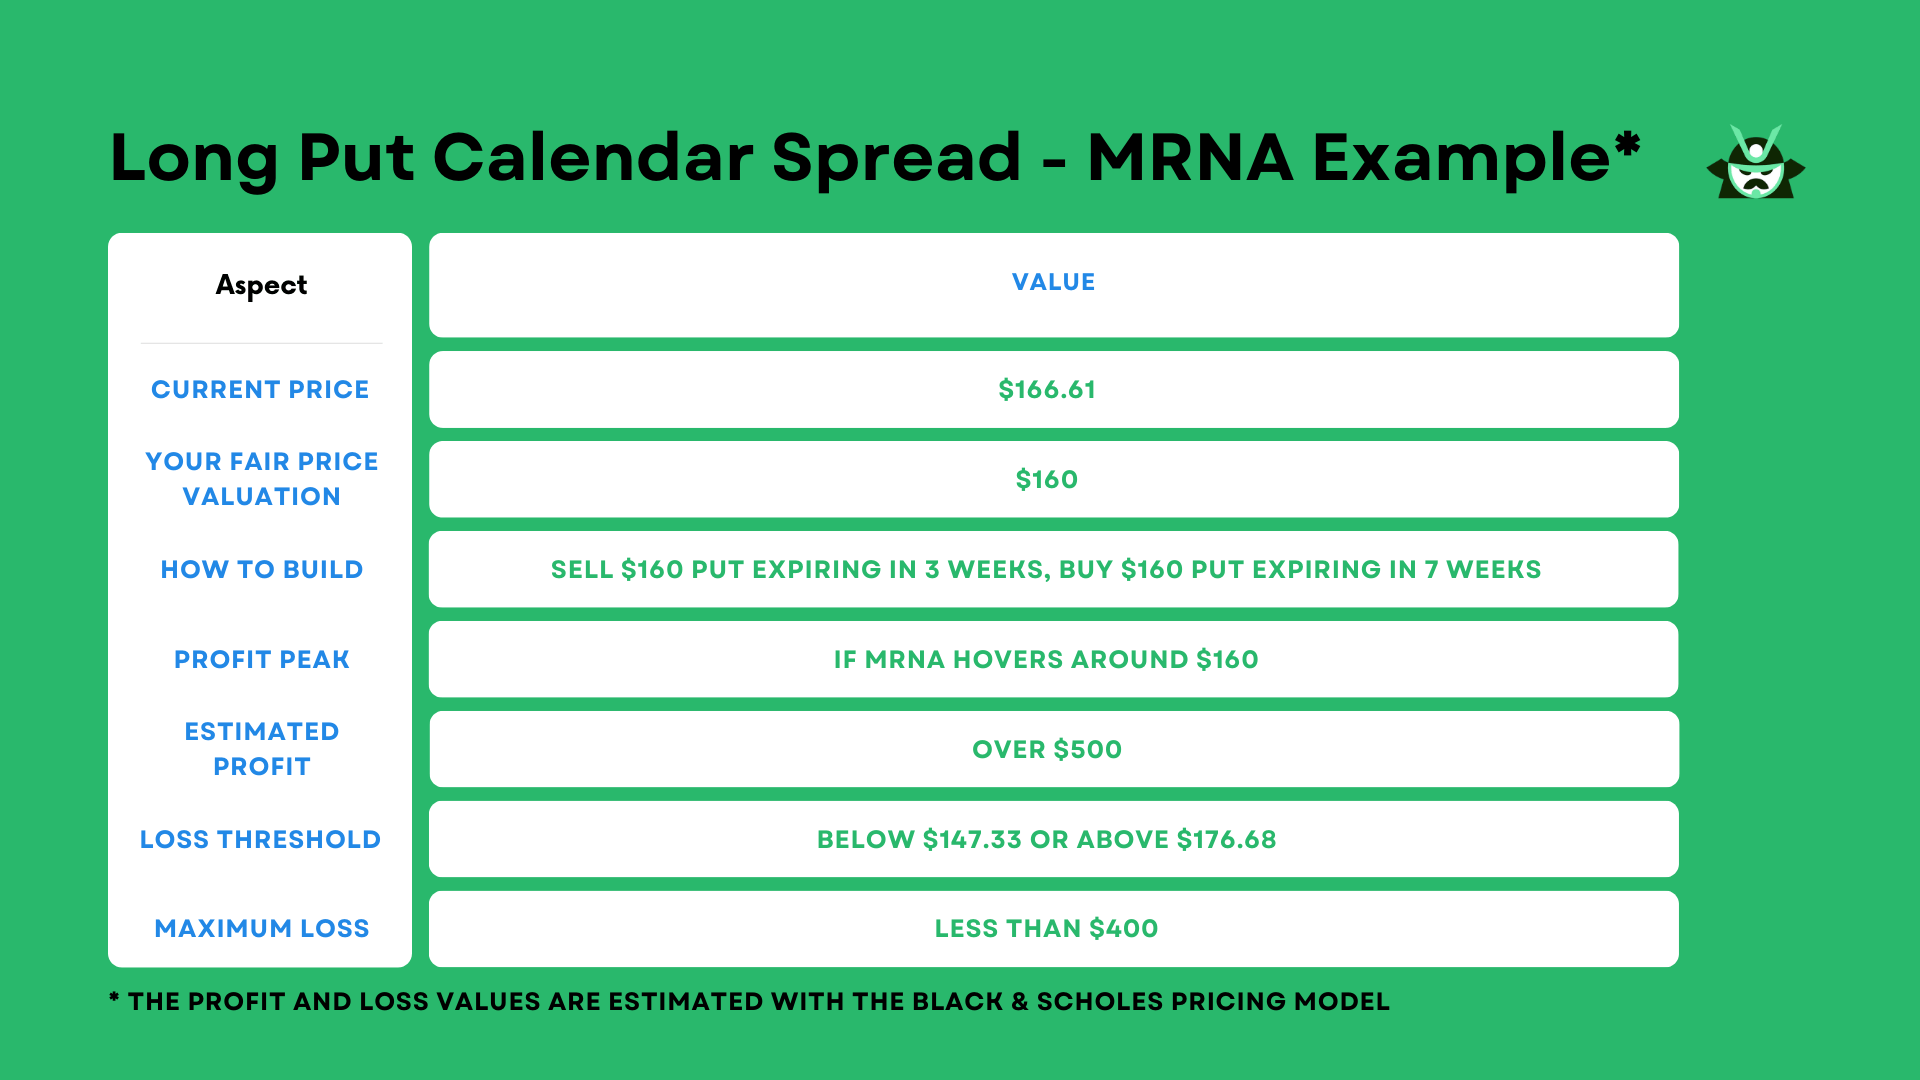 MRNA example for long put calendar spread